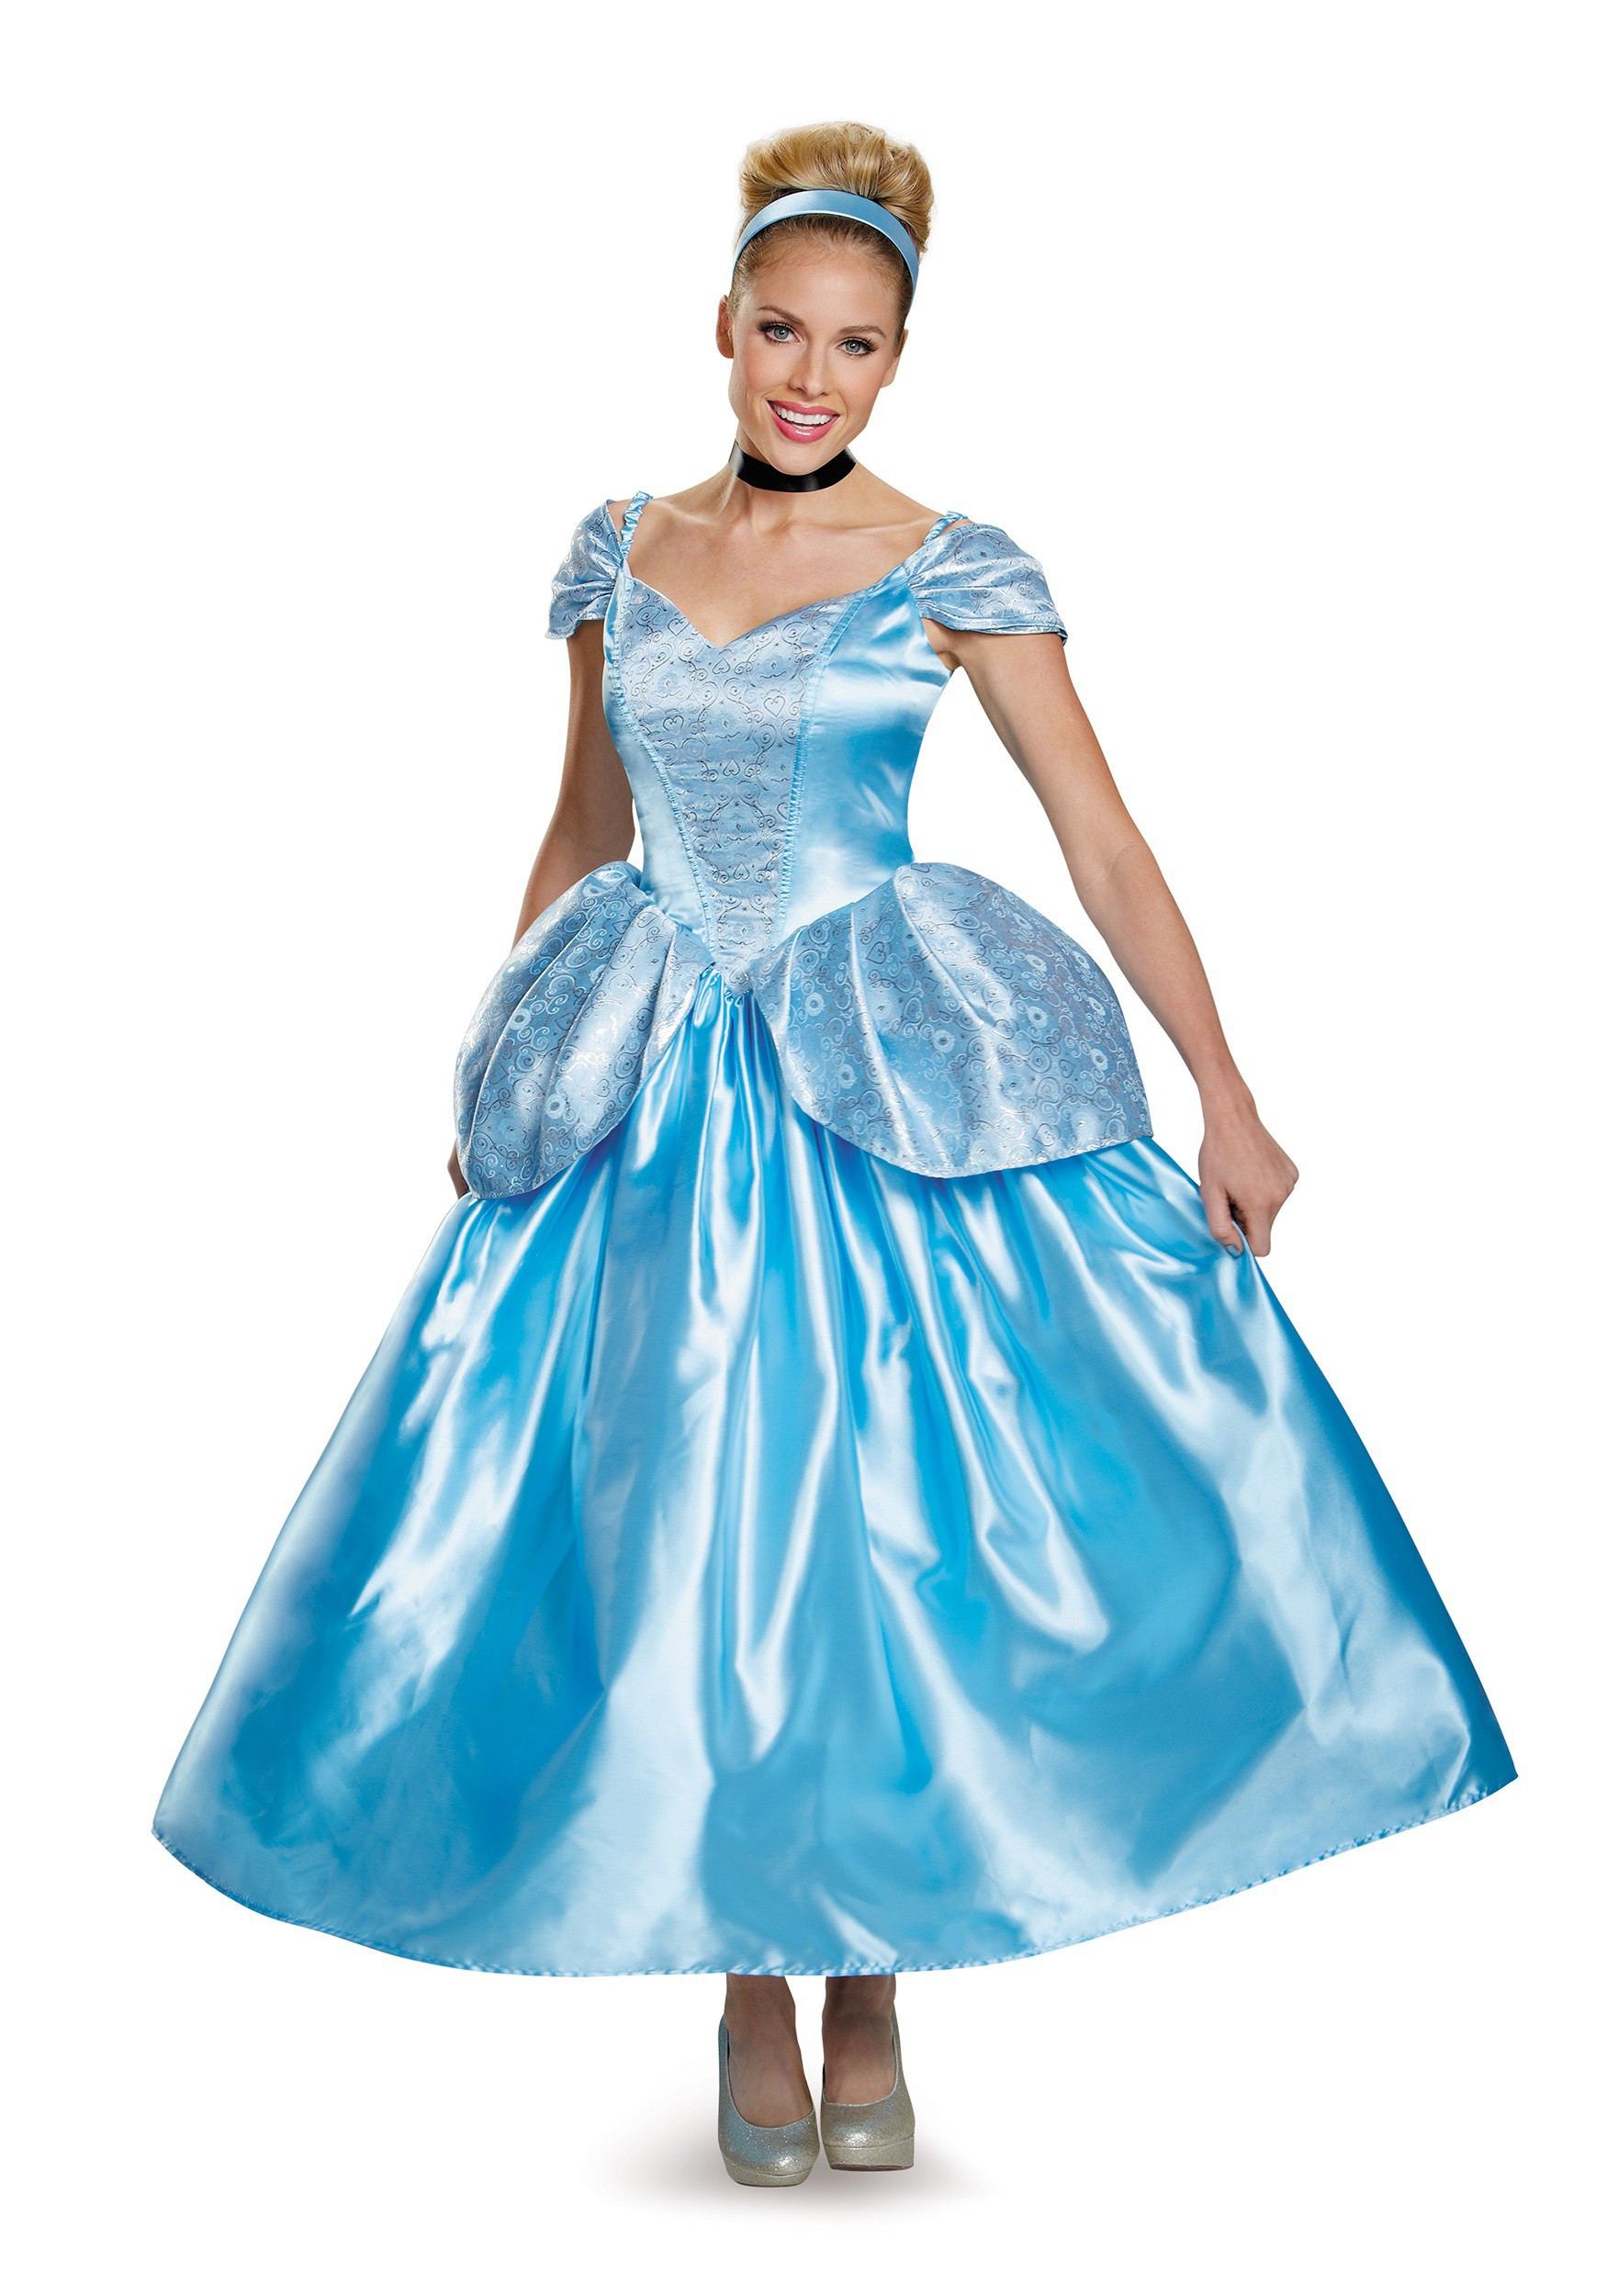 Cinderella DIY Costumes
 Women s Prestige Cinderella Costume